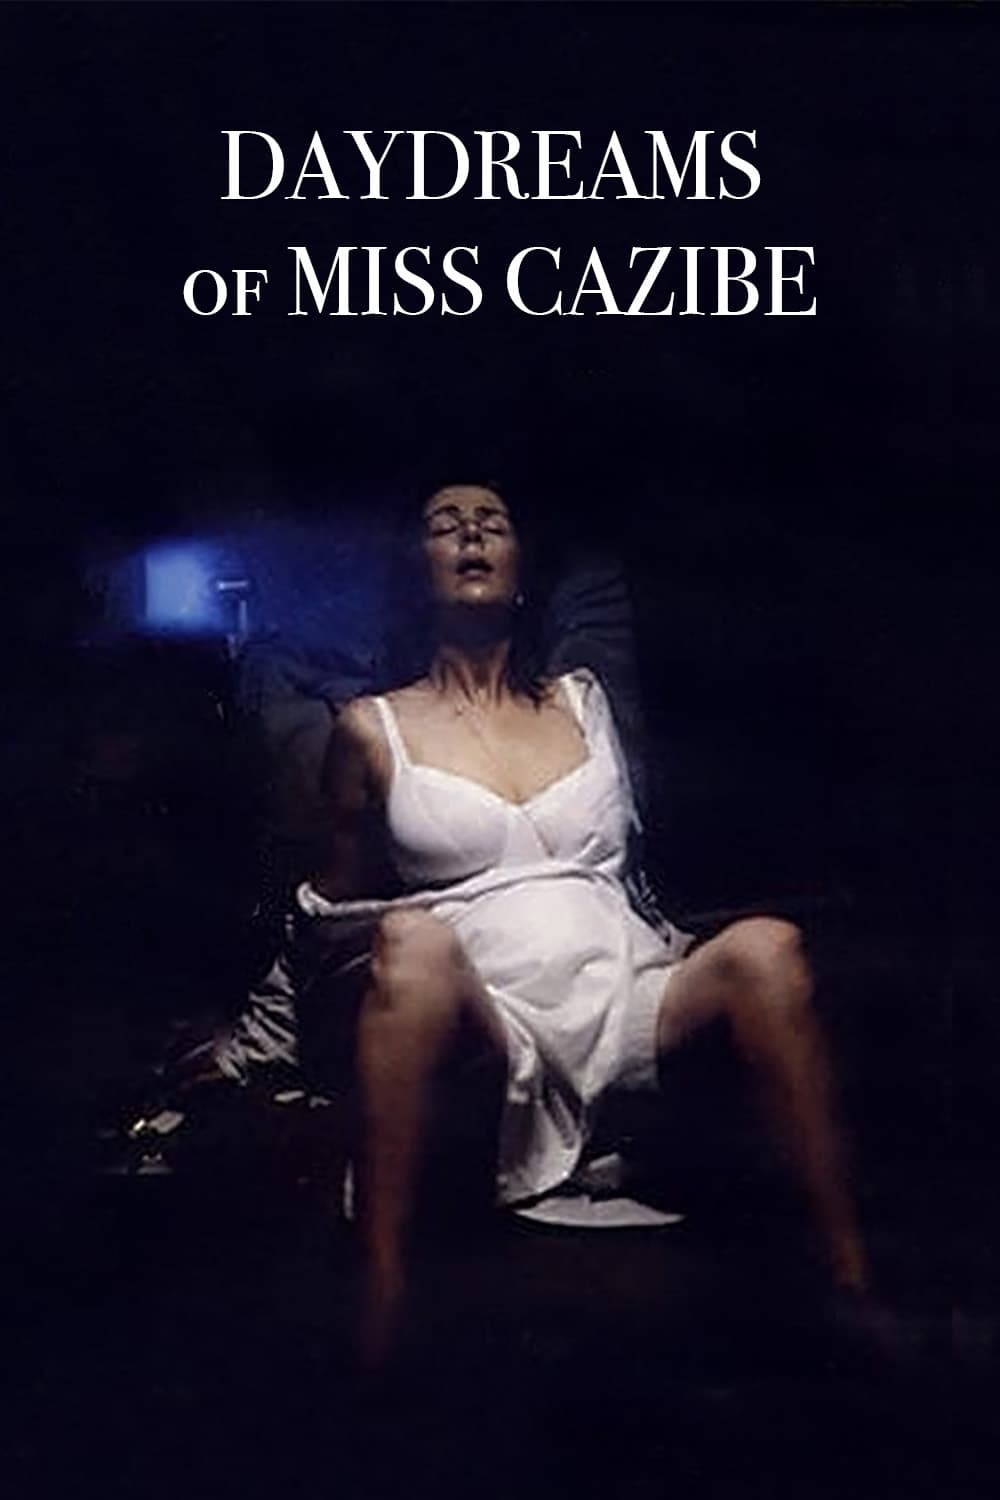 Daydreams of Miss Cazibe